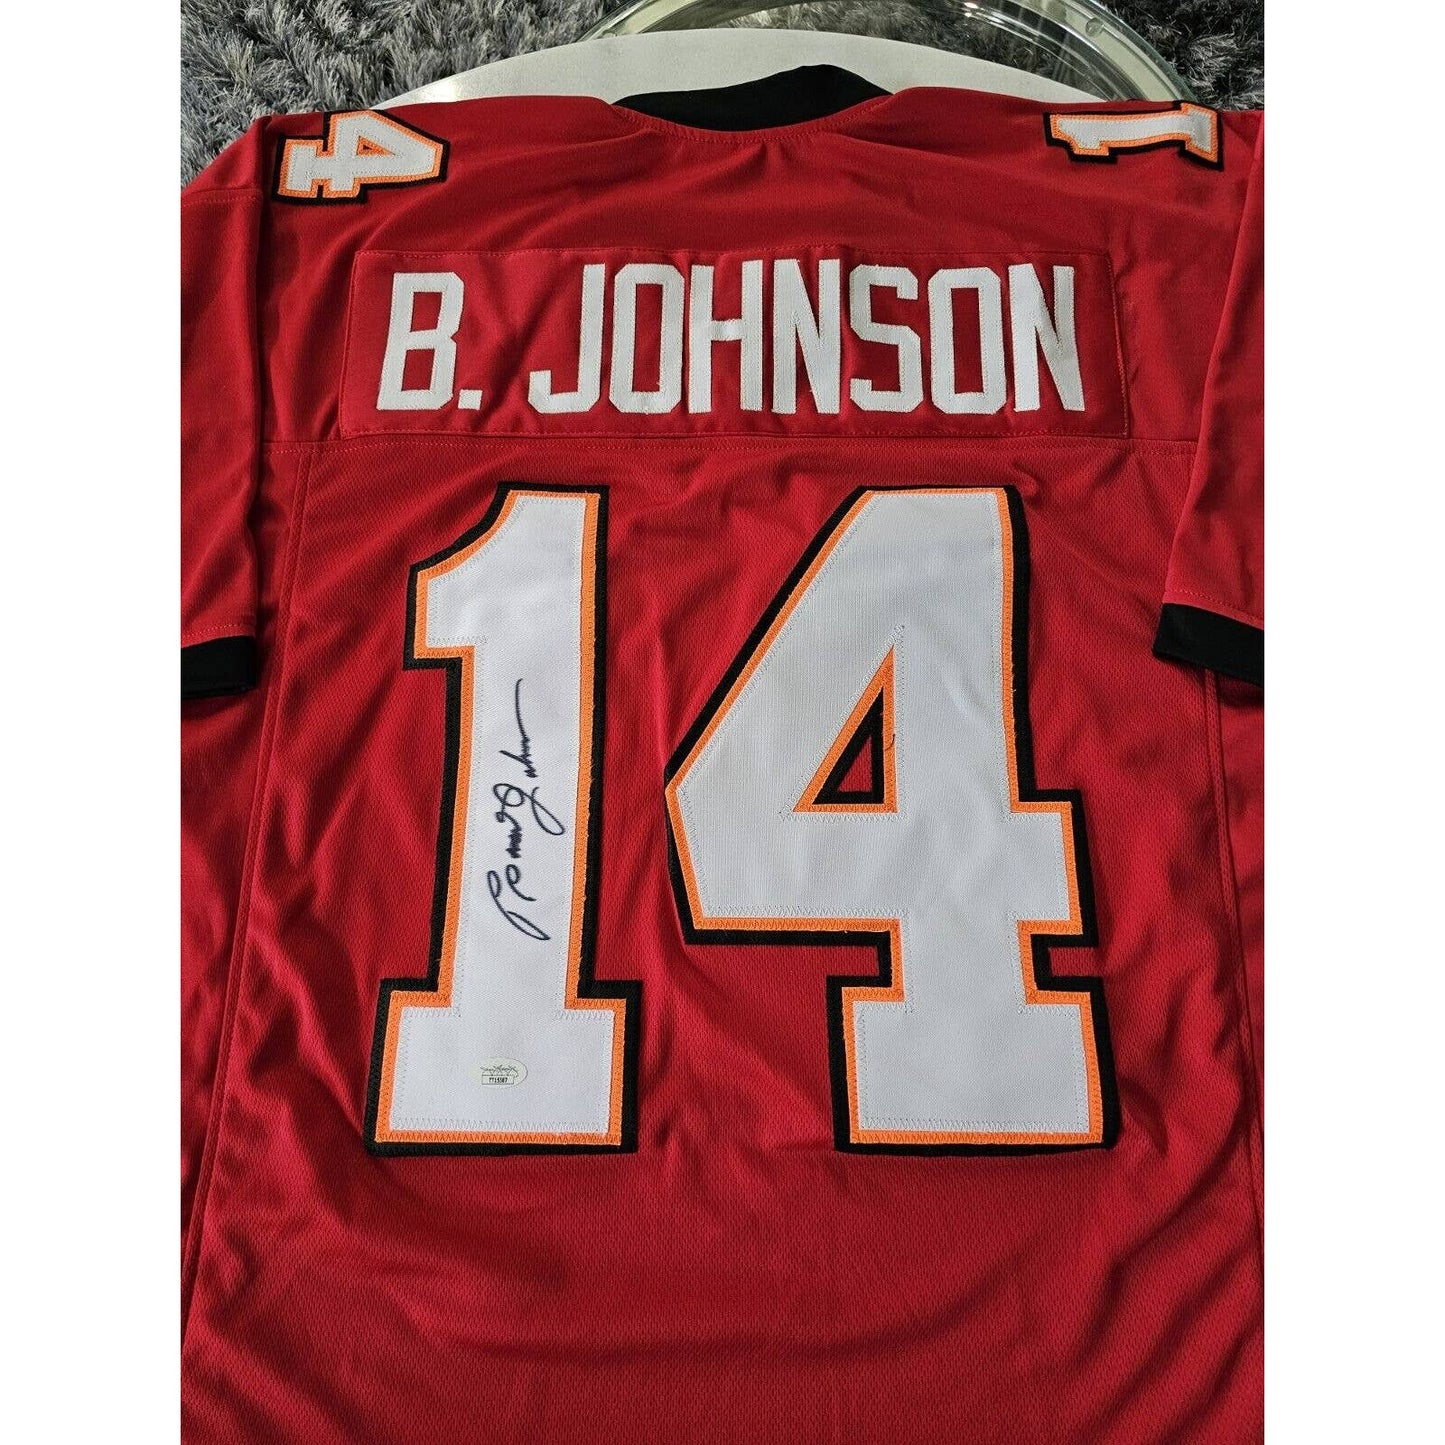 Brad Johnson Autographed/Signed Jersey JSA Sticker Tampa Bay Buccaneers